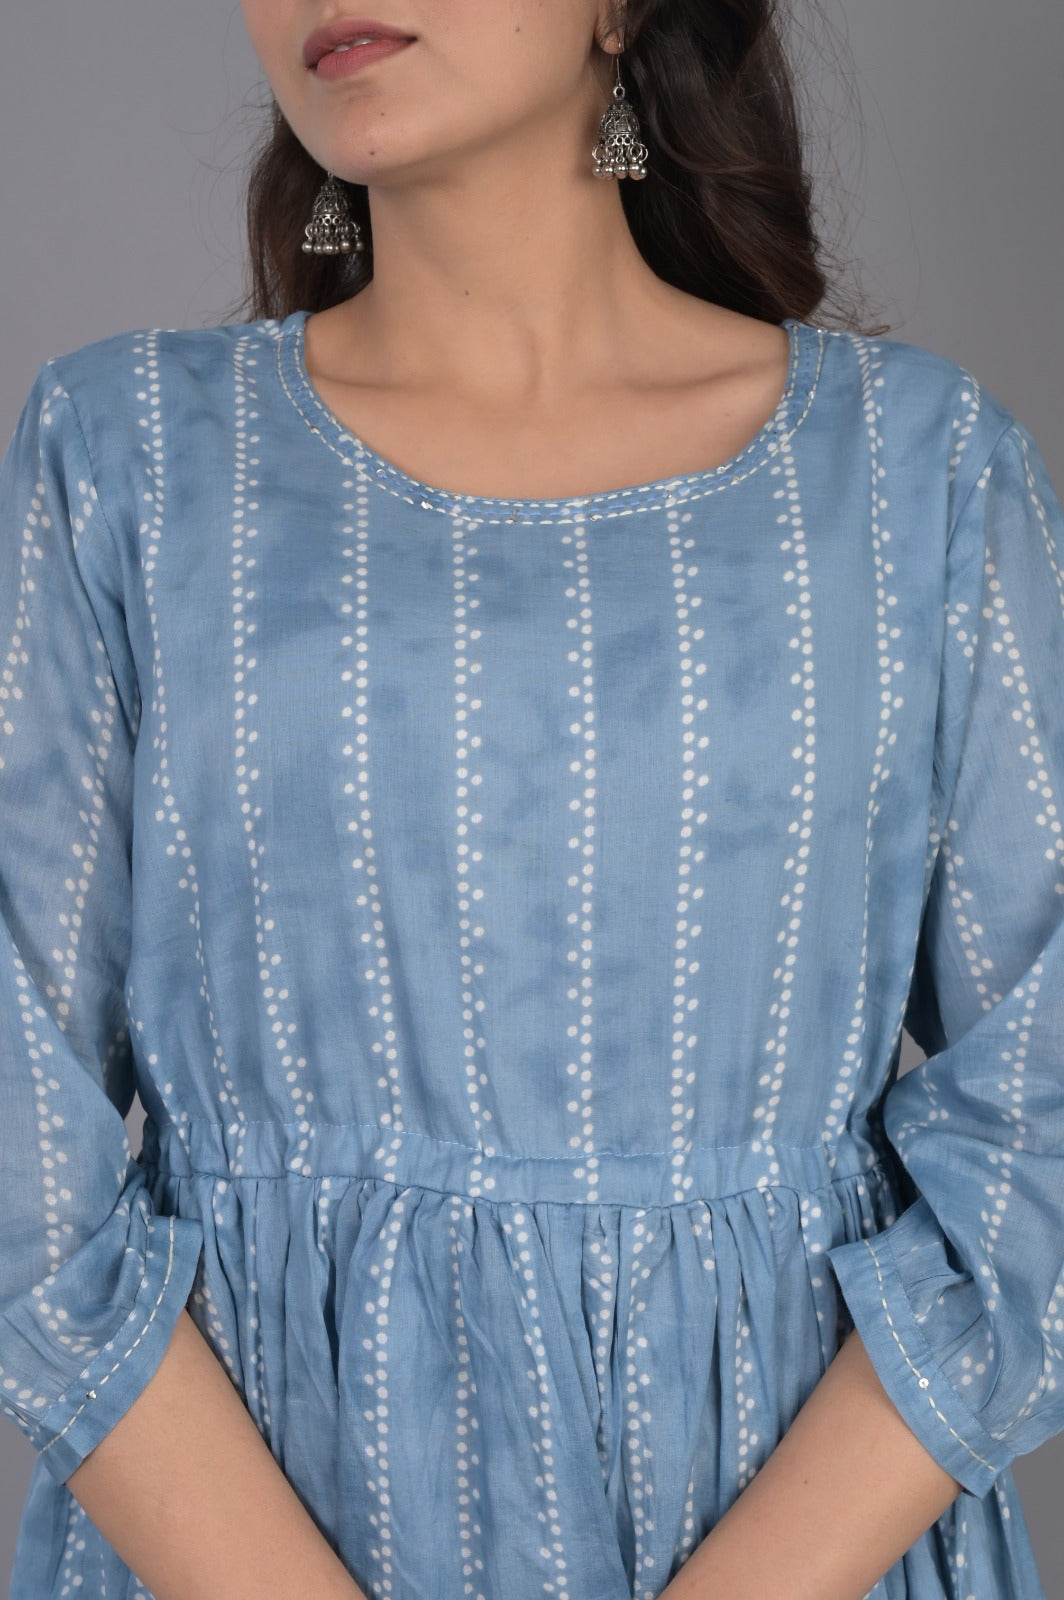 Cotton 3-Tier Blue Flared Dress